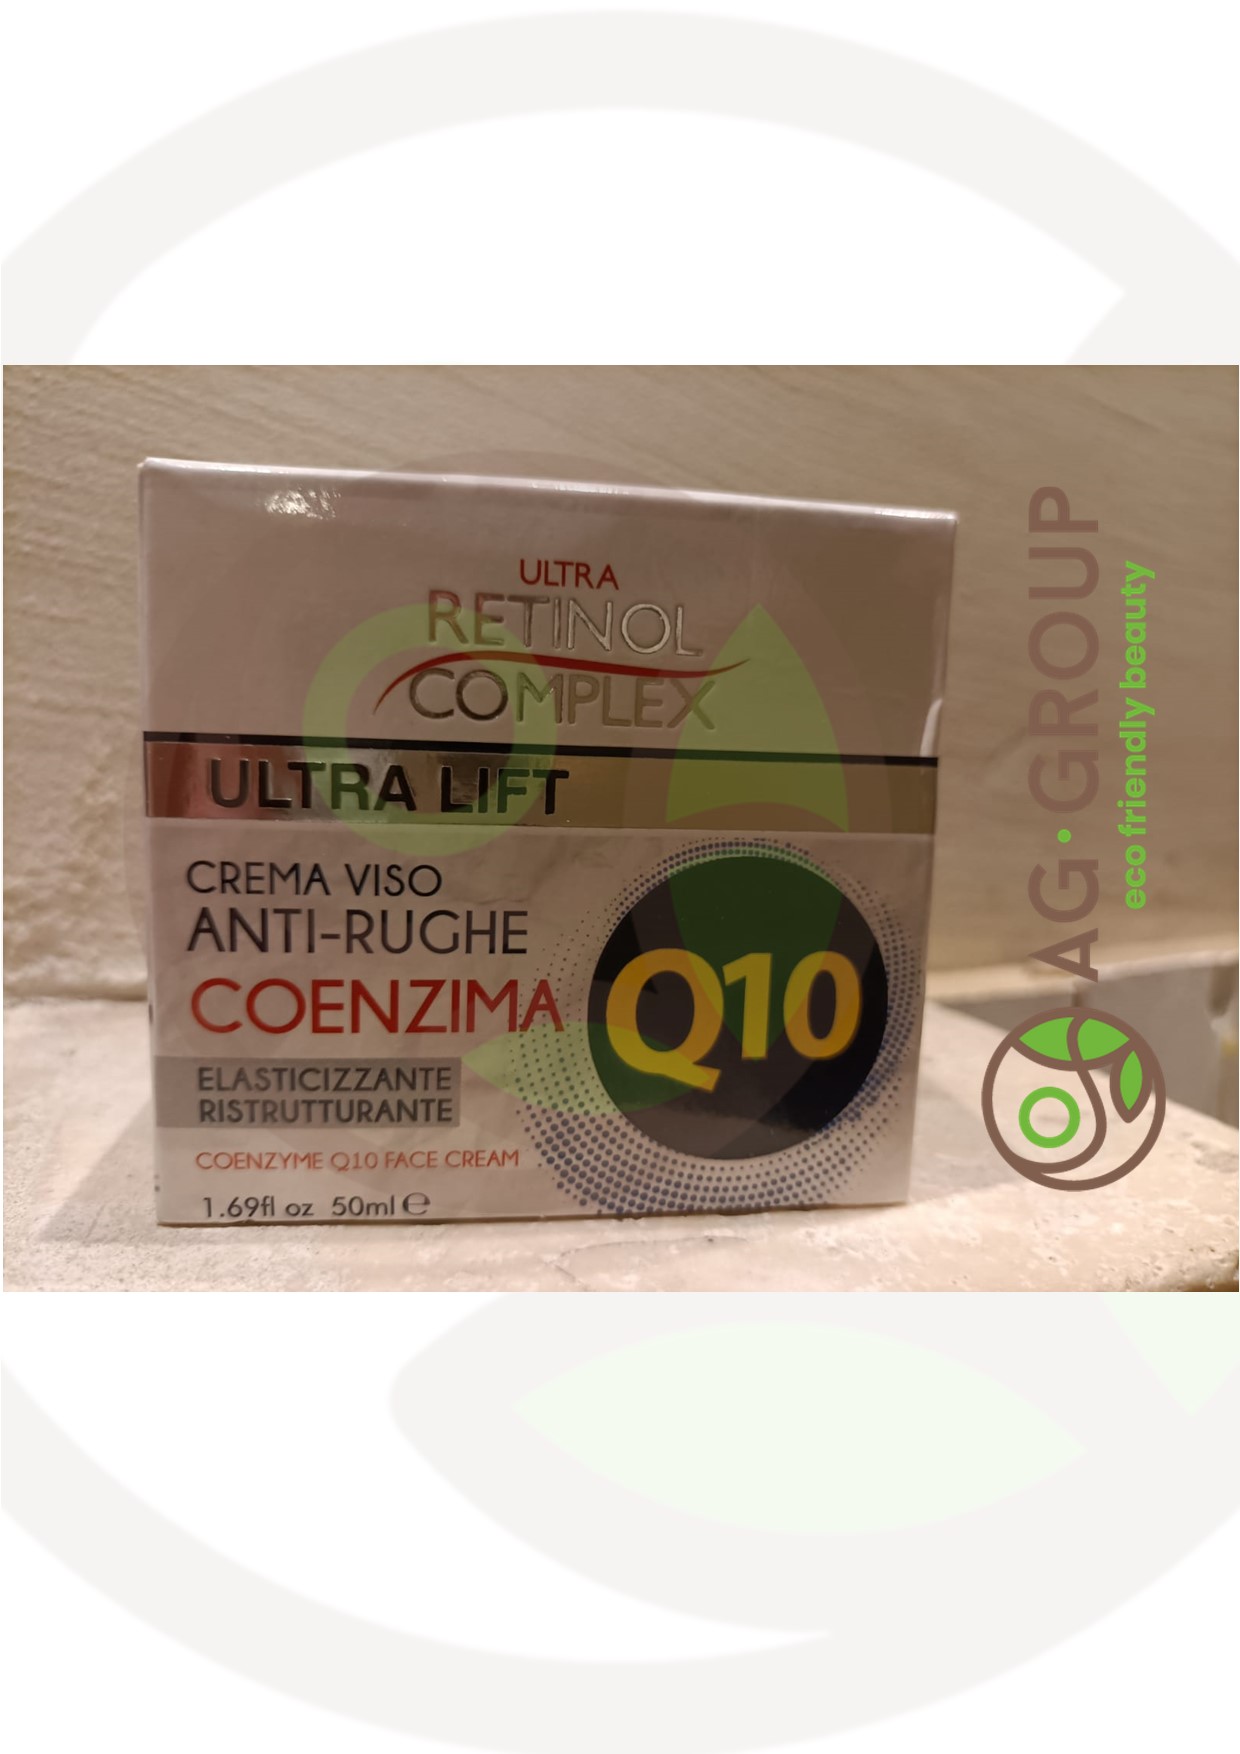 Featured image for “Crema Viso Anti-Rughe Q10”